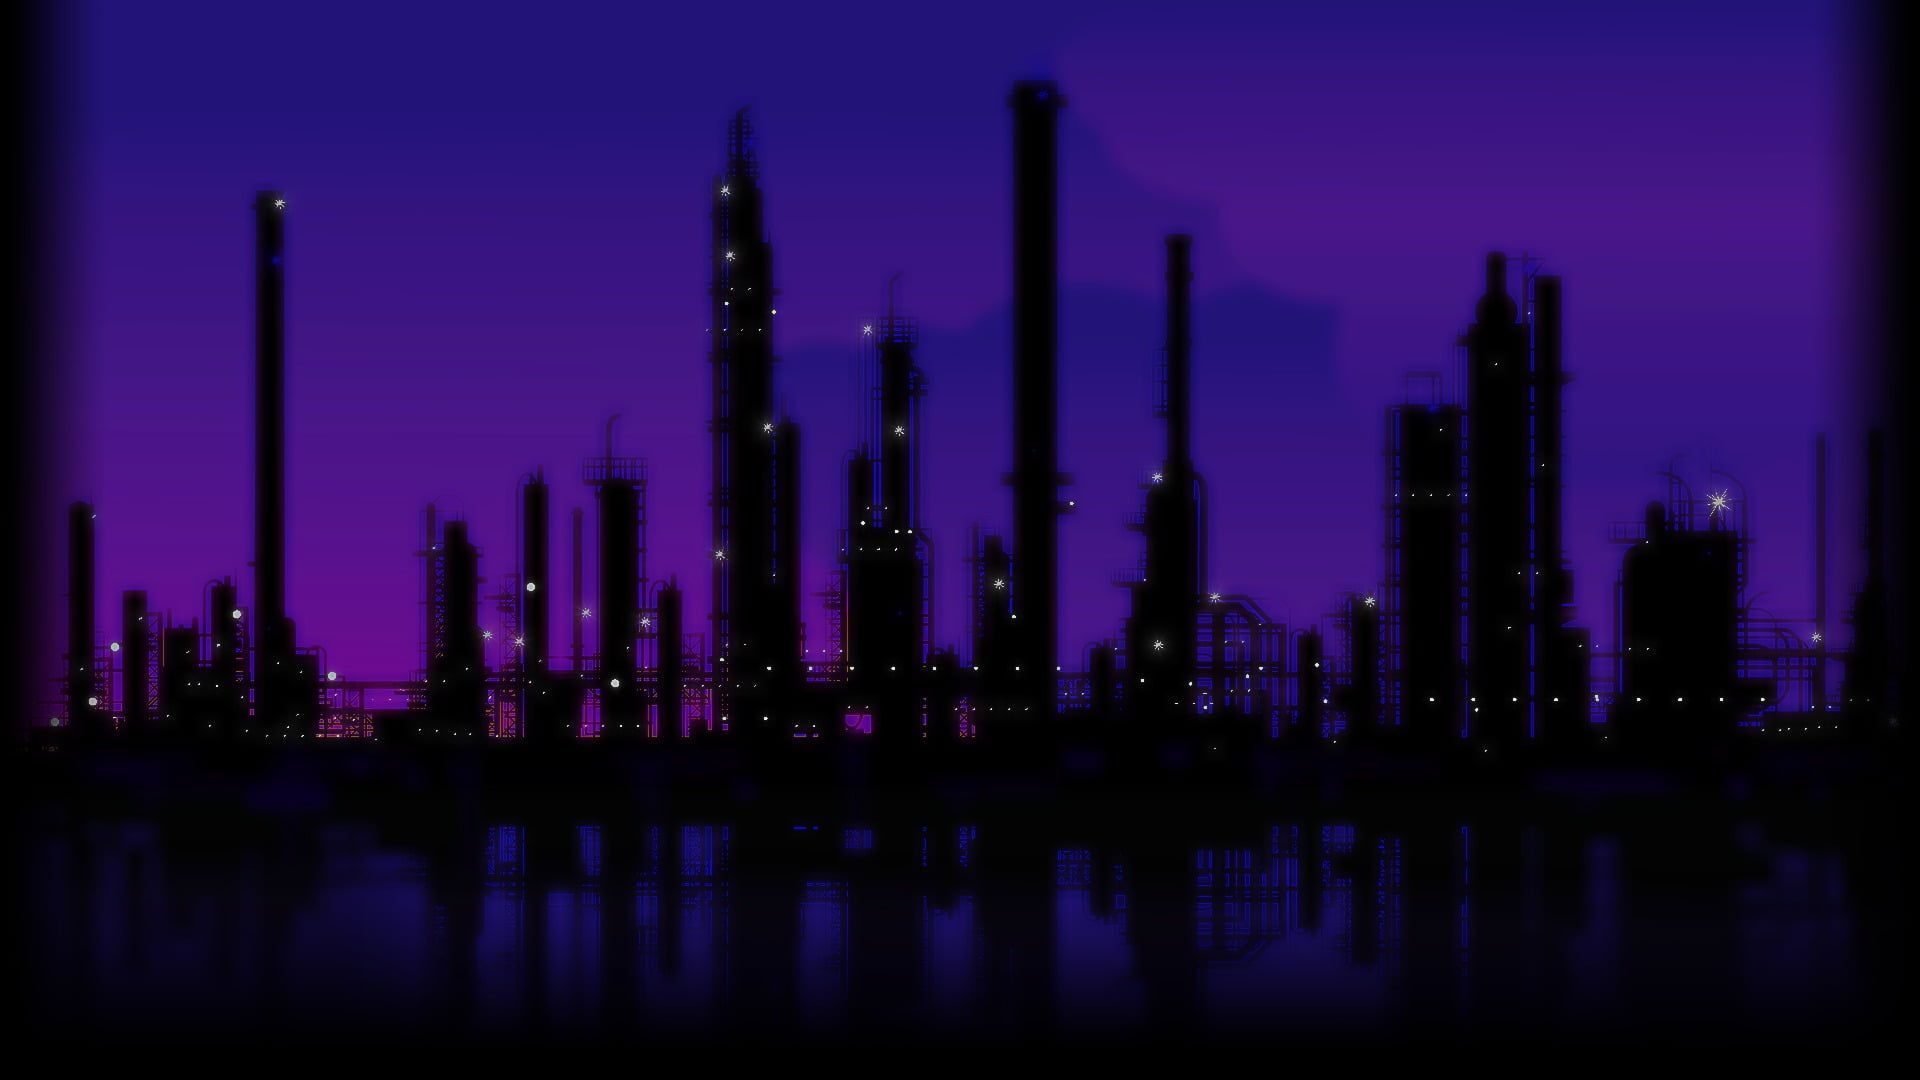 A city skyline at night with purple lighting - 1920x1080